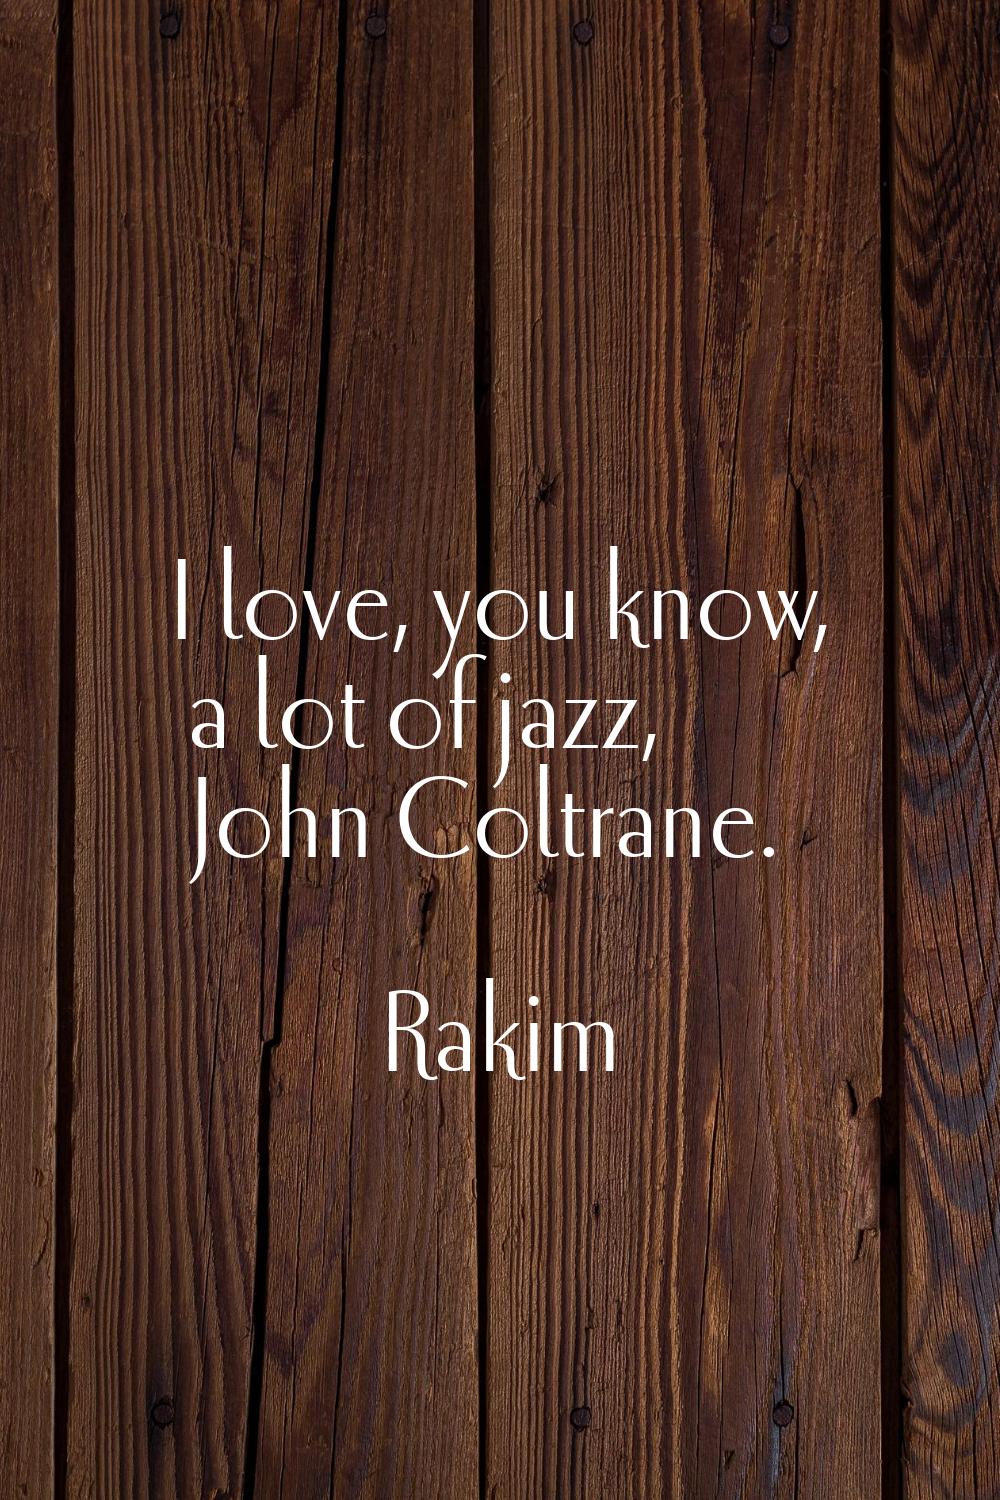 I love, you know, a lot of jazz, John Coltrane.